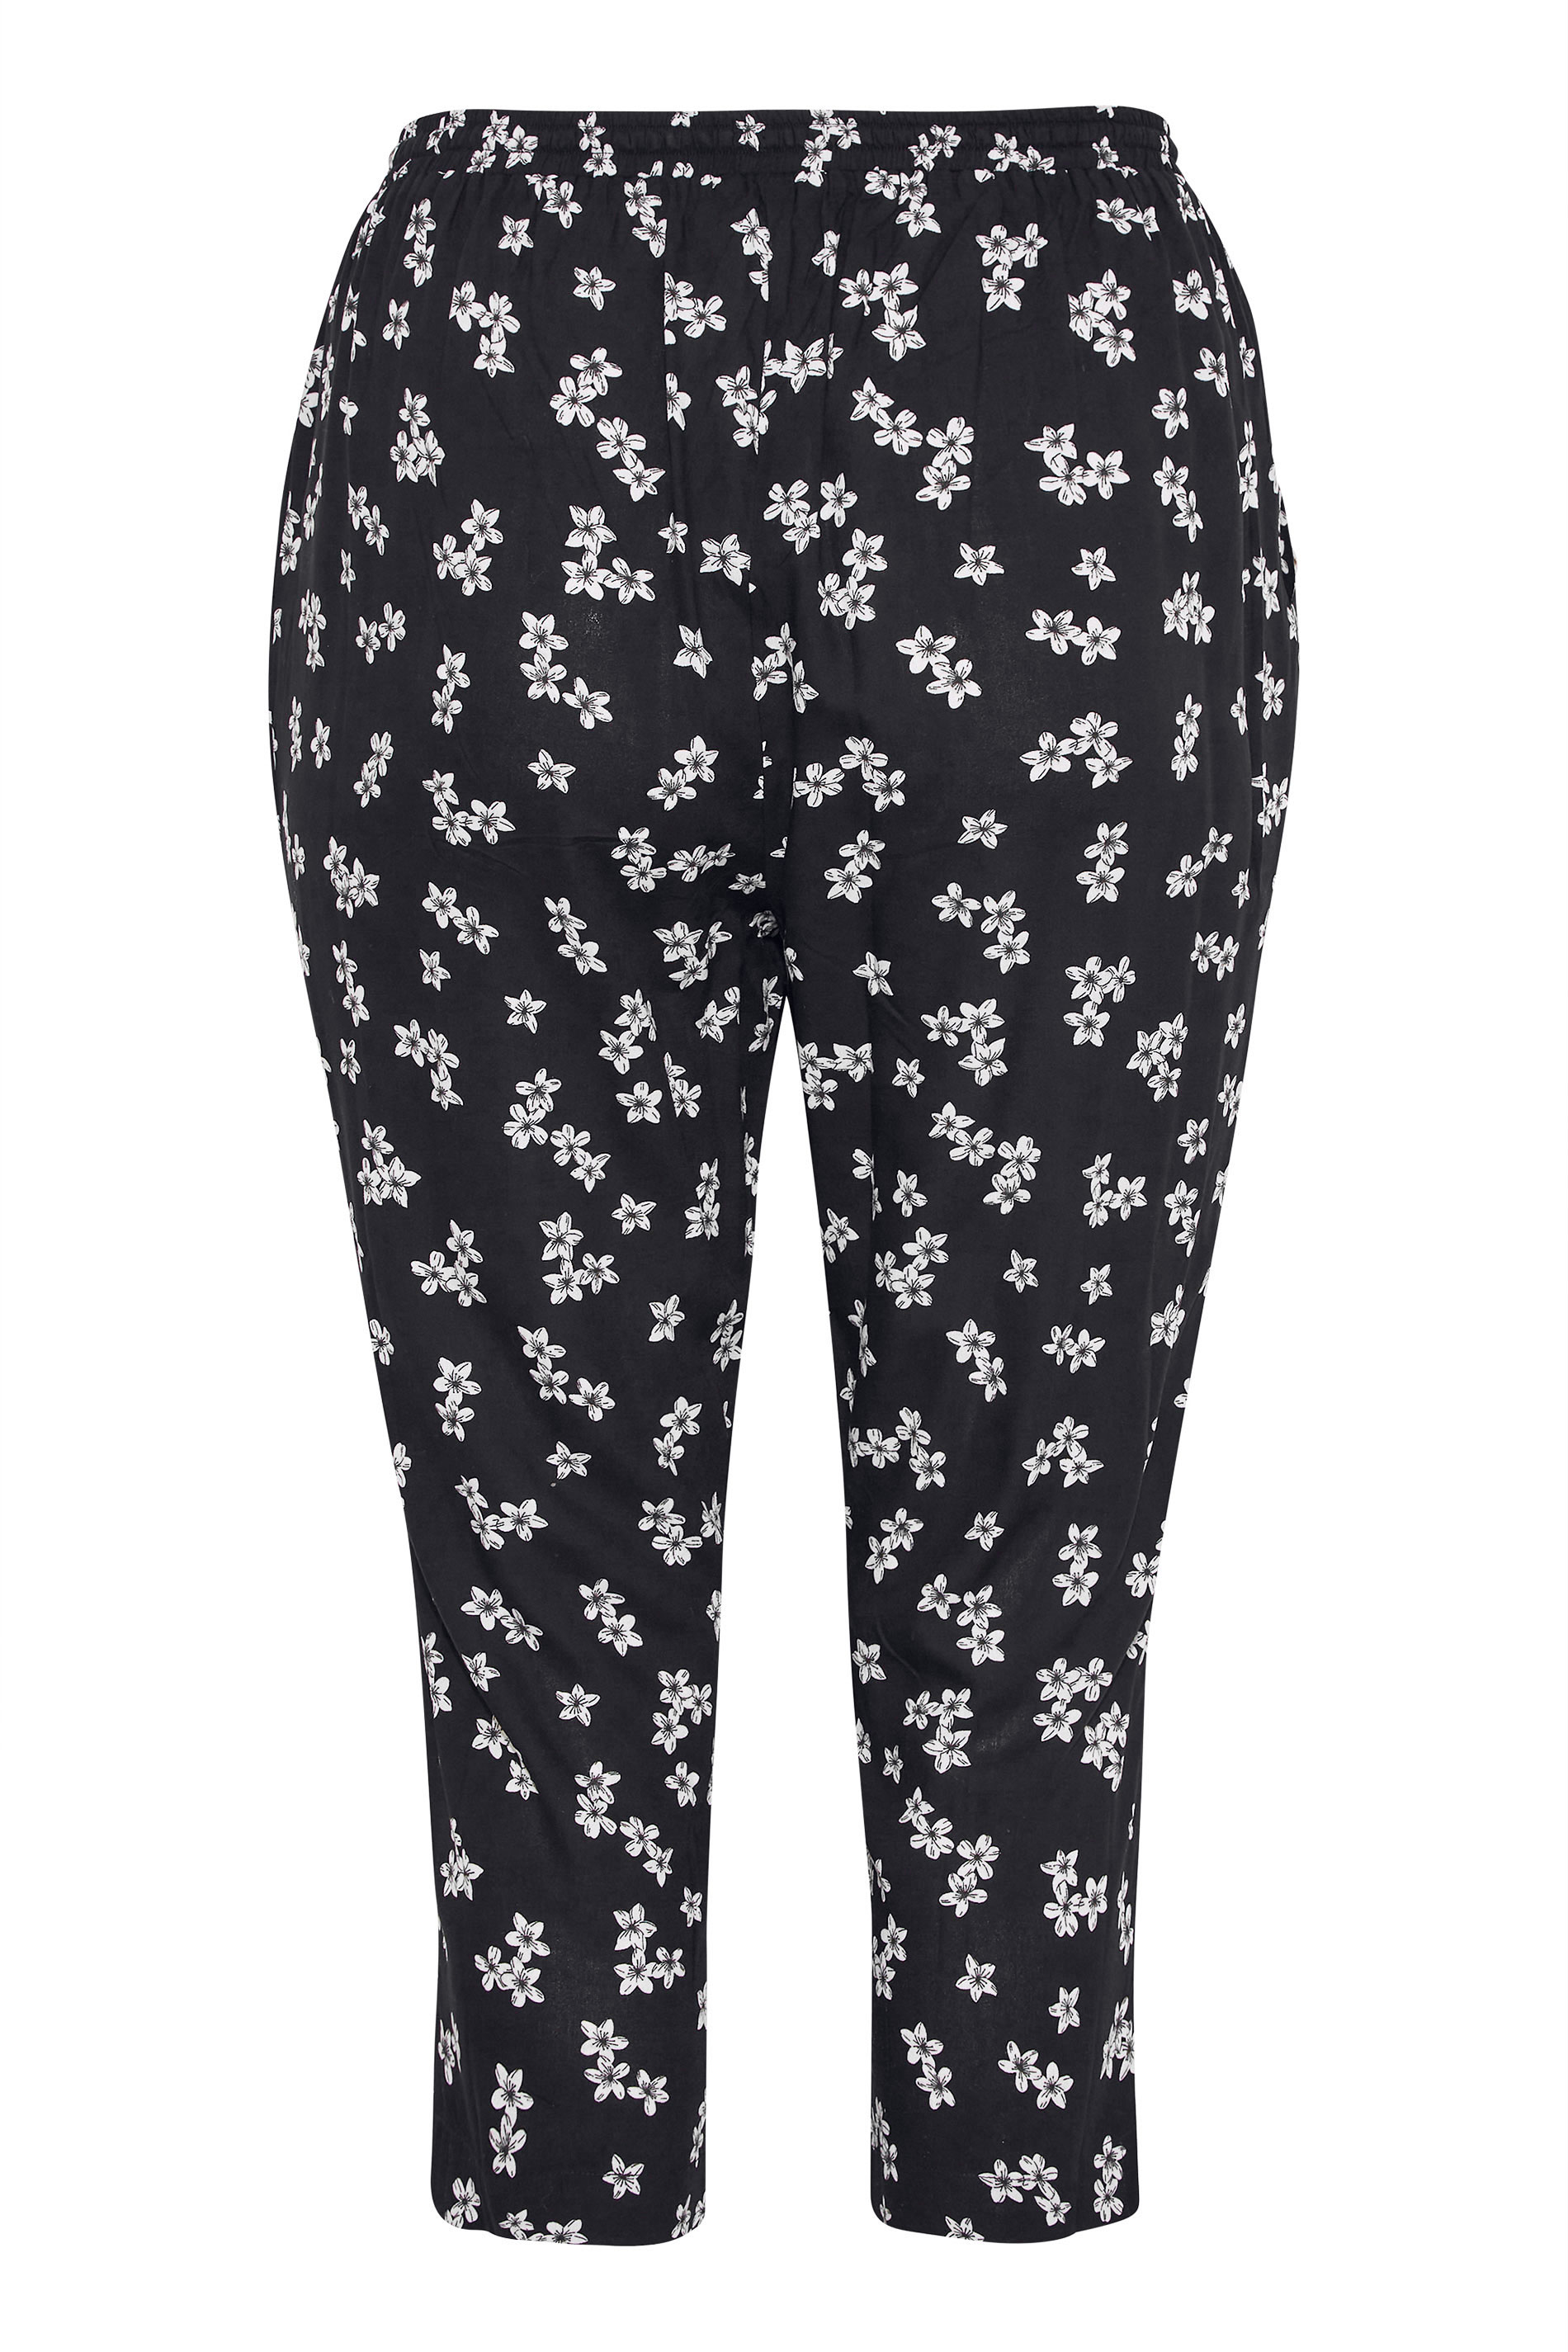 Grande taille  Pantalons Grande taille  Joggings | Jogging Noir Floral Léger Pantacourt - WE89700